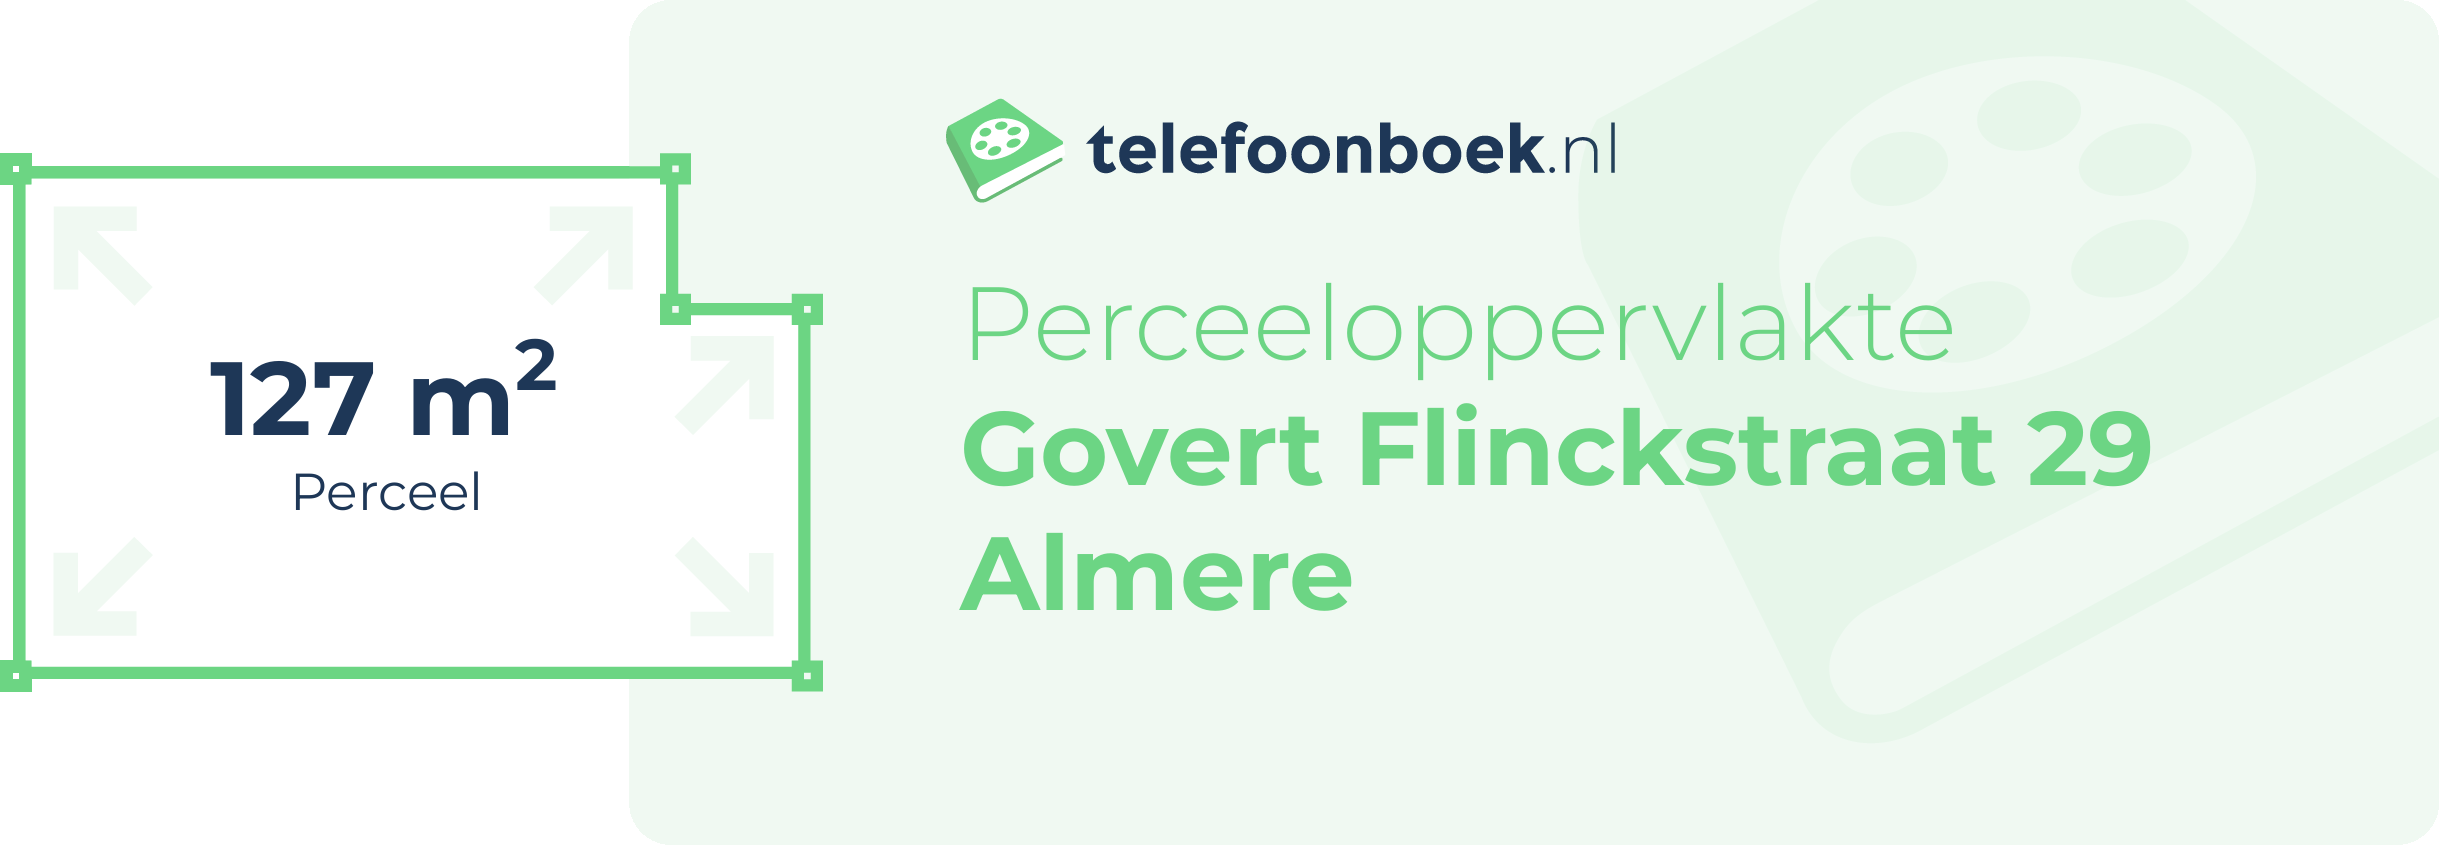 Perceeloppervlakte Govert Flinckstraat 29 Almere